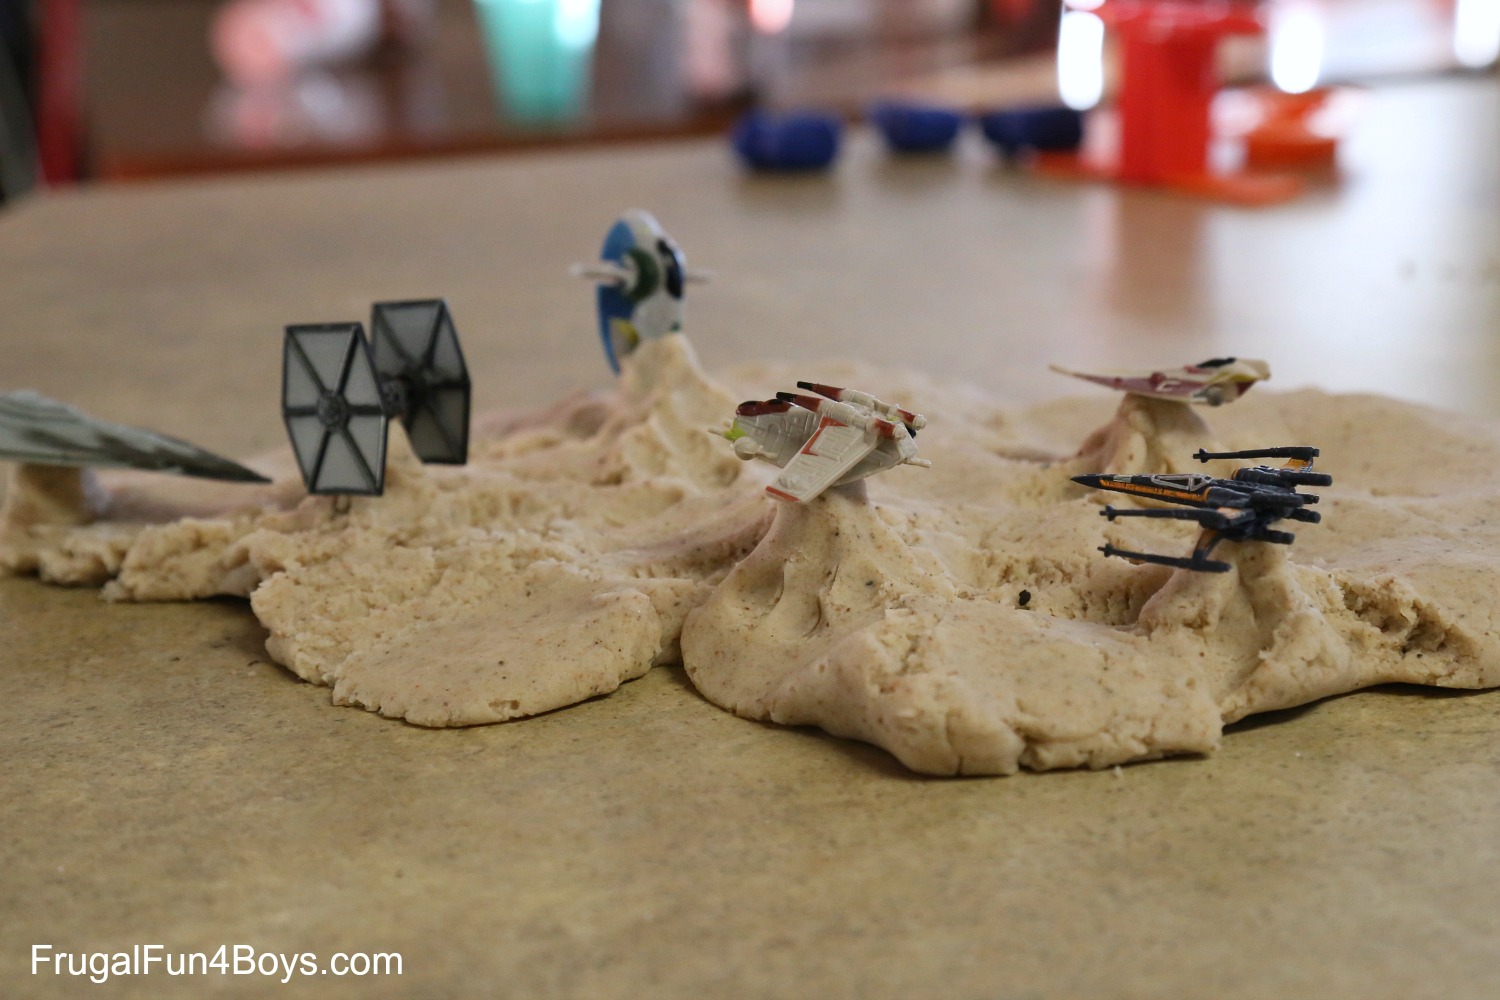 Star Wars Play Dough Imaginative Play!